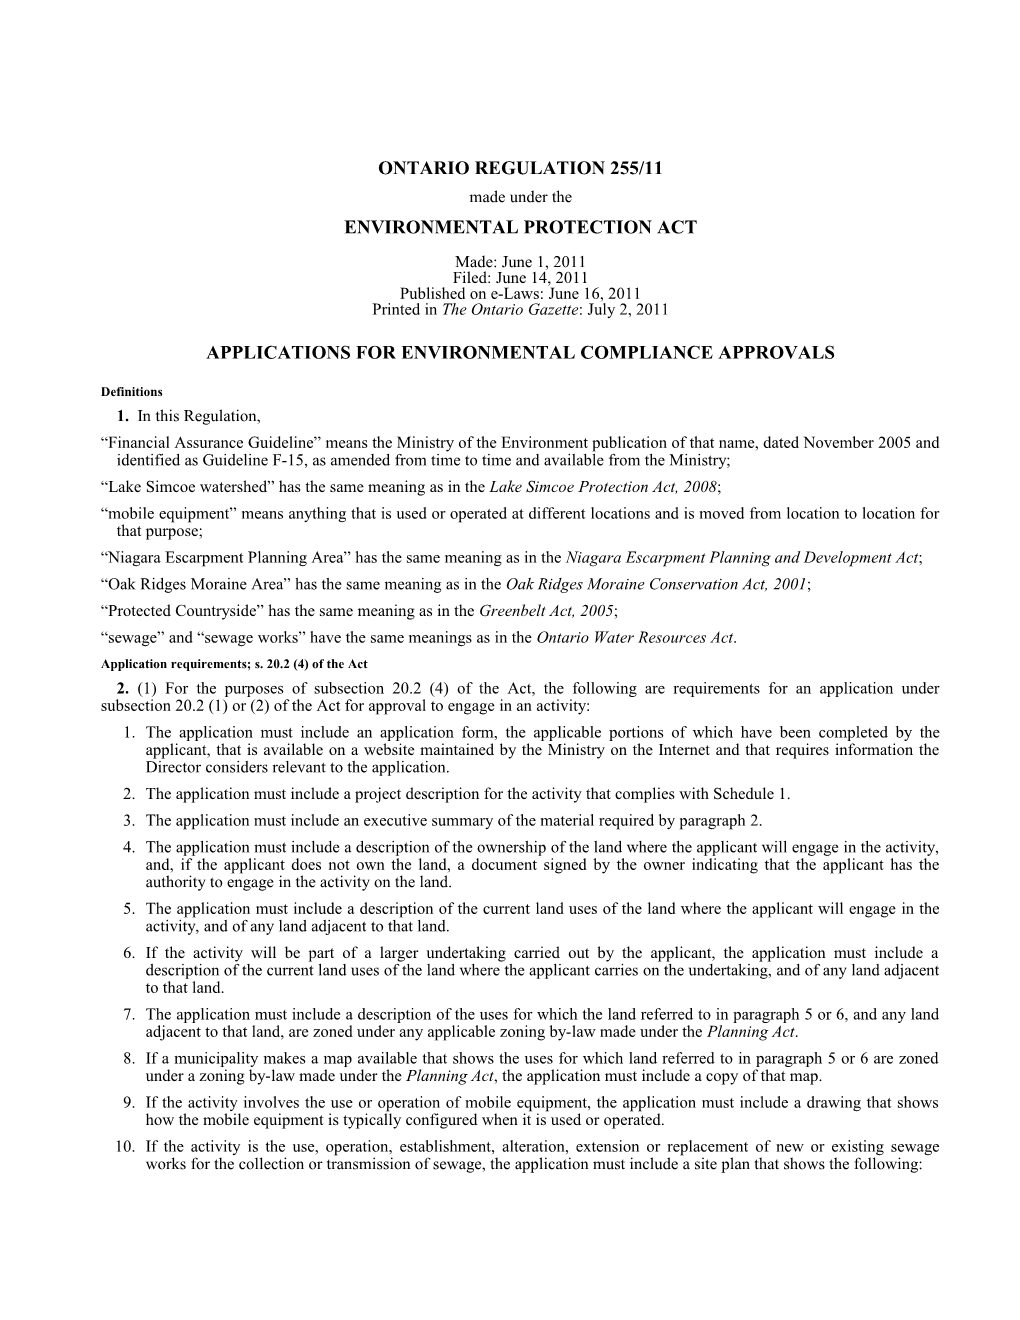 ENVIRONMENTAL PROTECTION ACT - O. Reg. 255/11